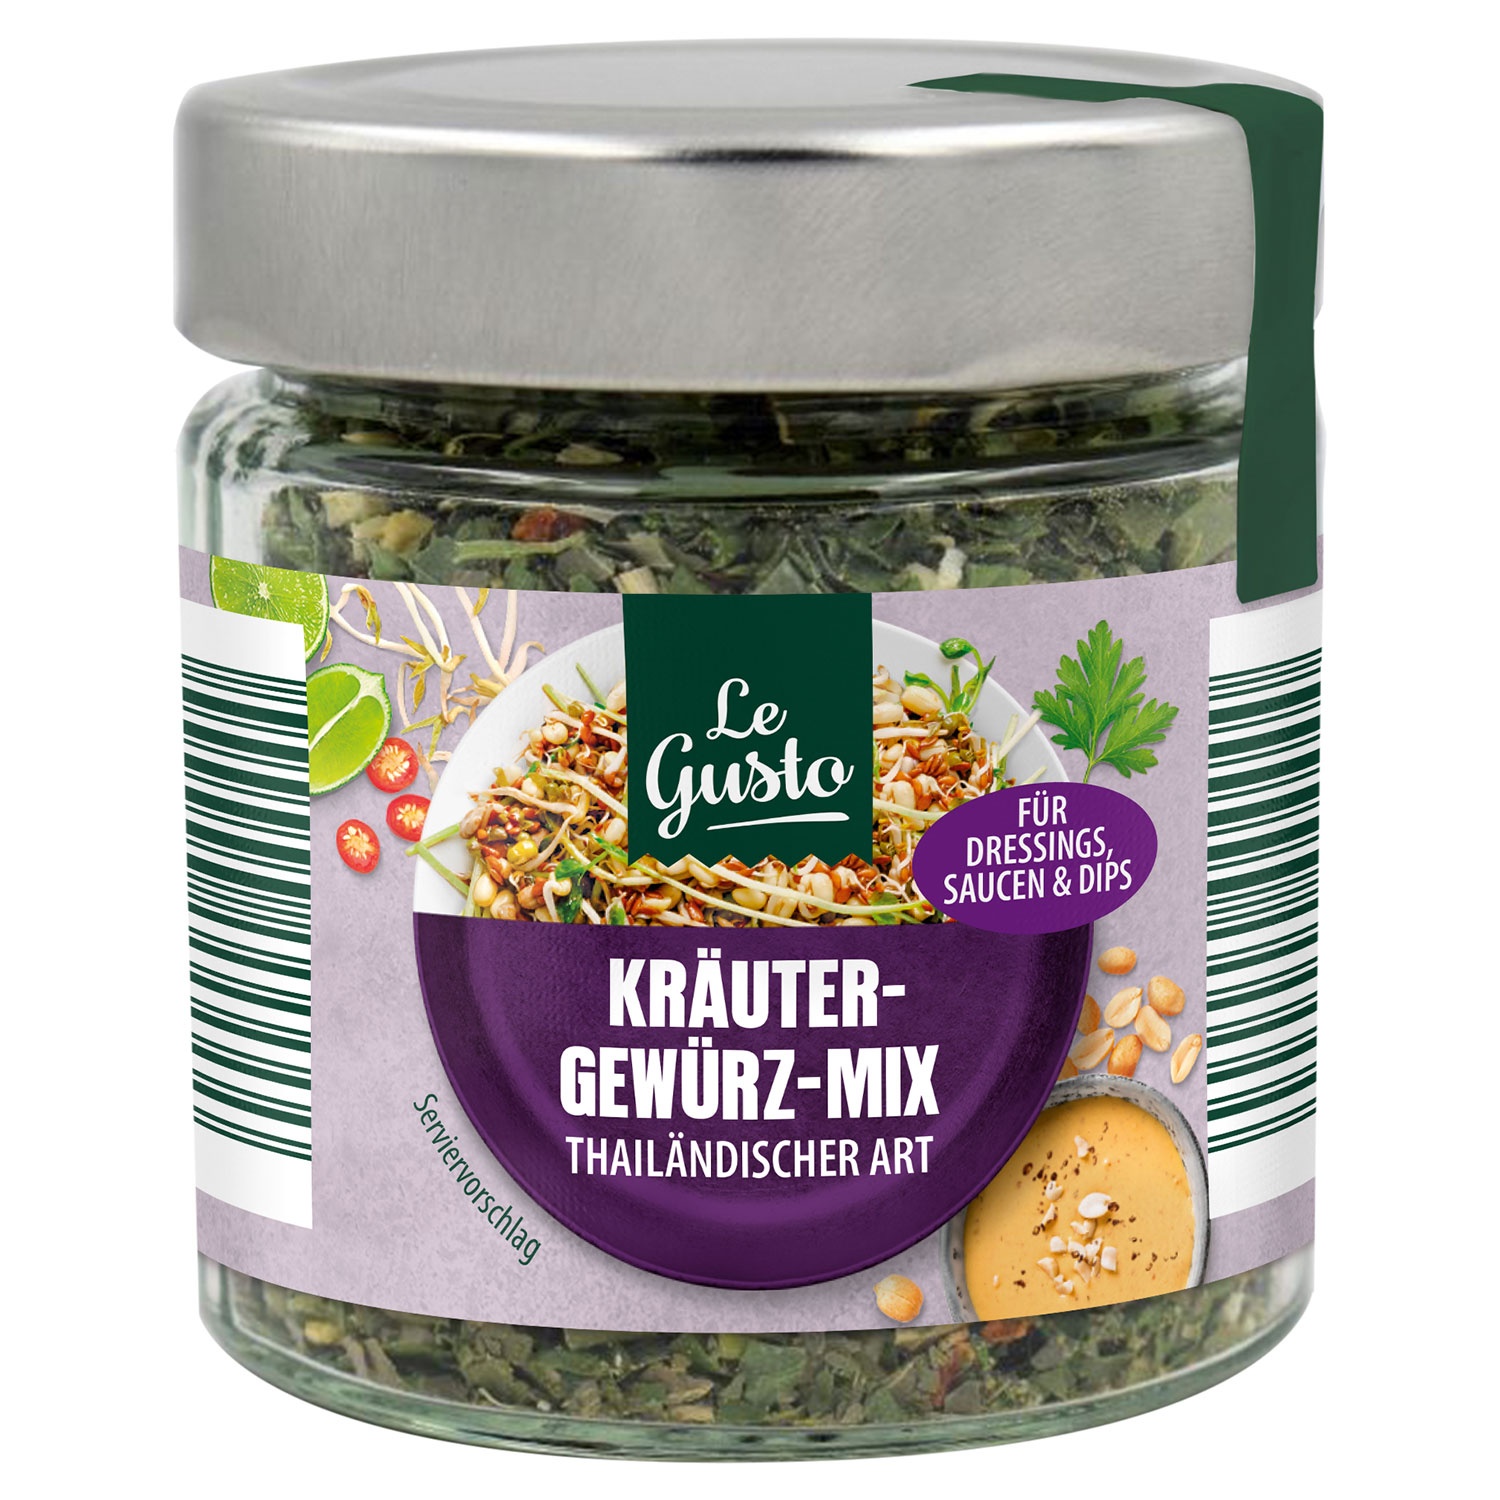 LE GUSTO Kräuter-Gewürz-Mix 15 g